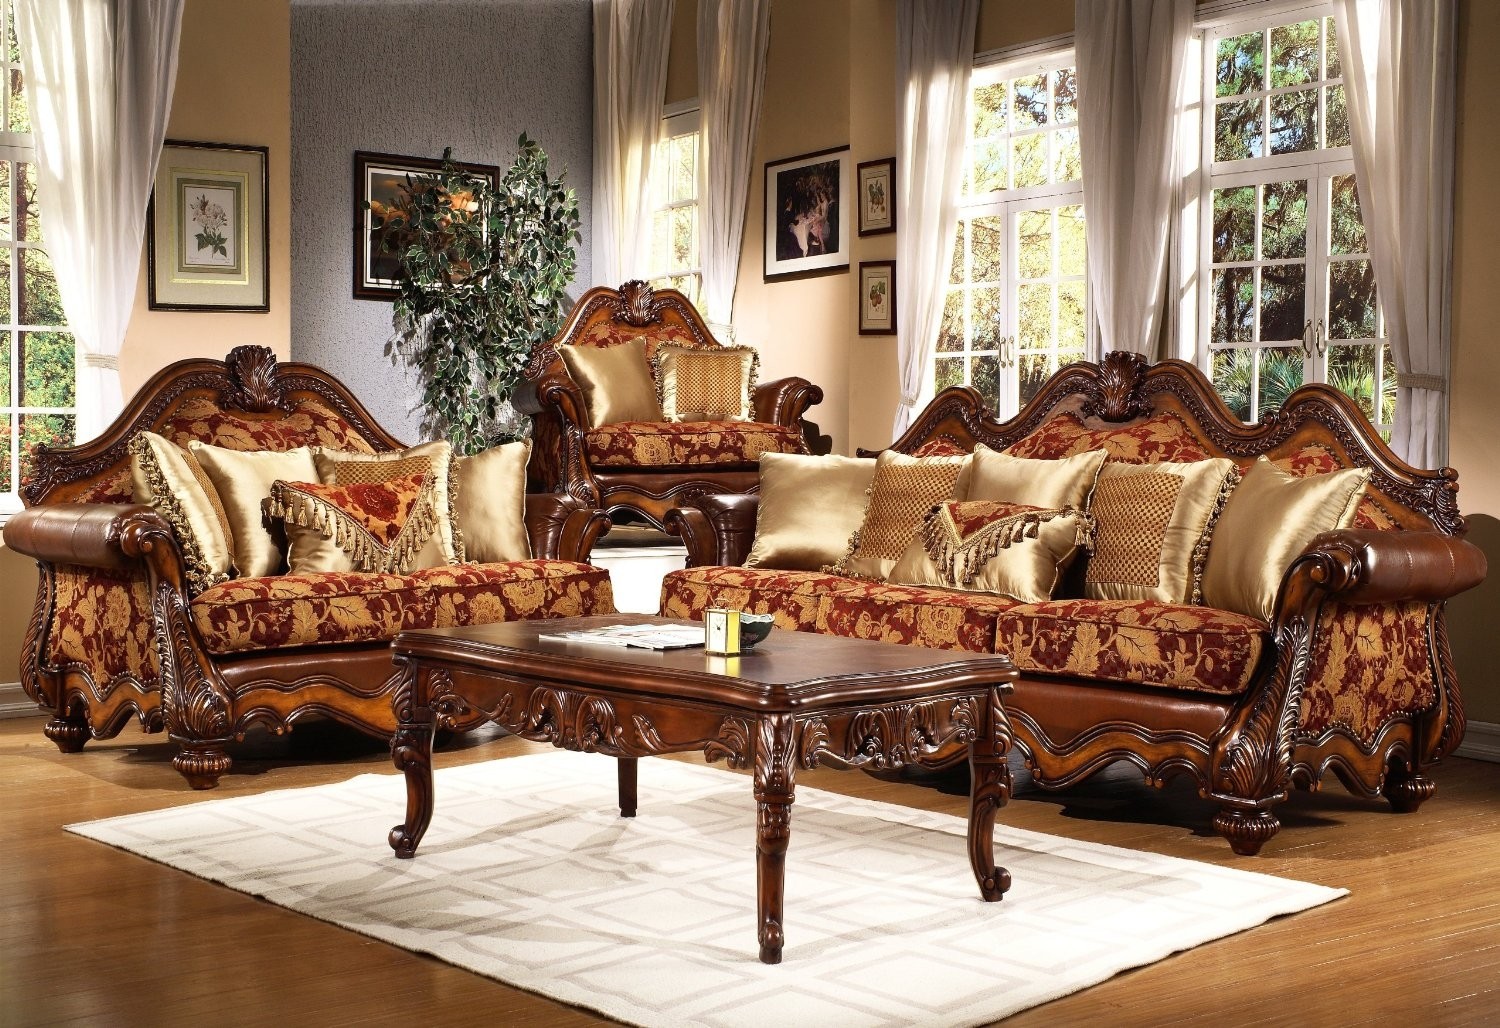 Victorian Living Room Furniture Ideas On Foter